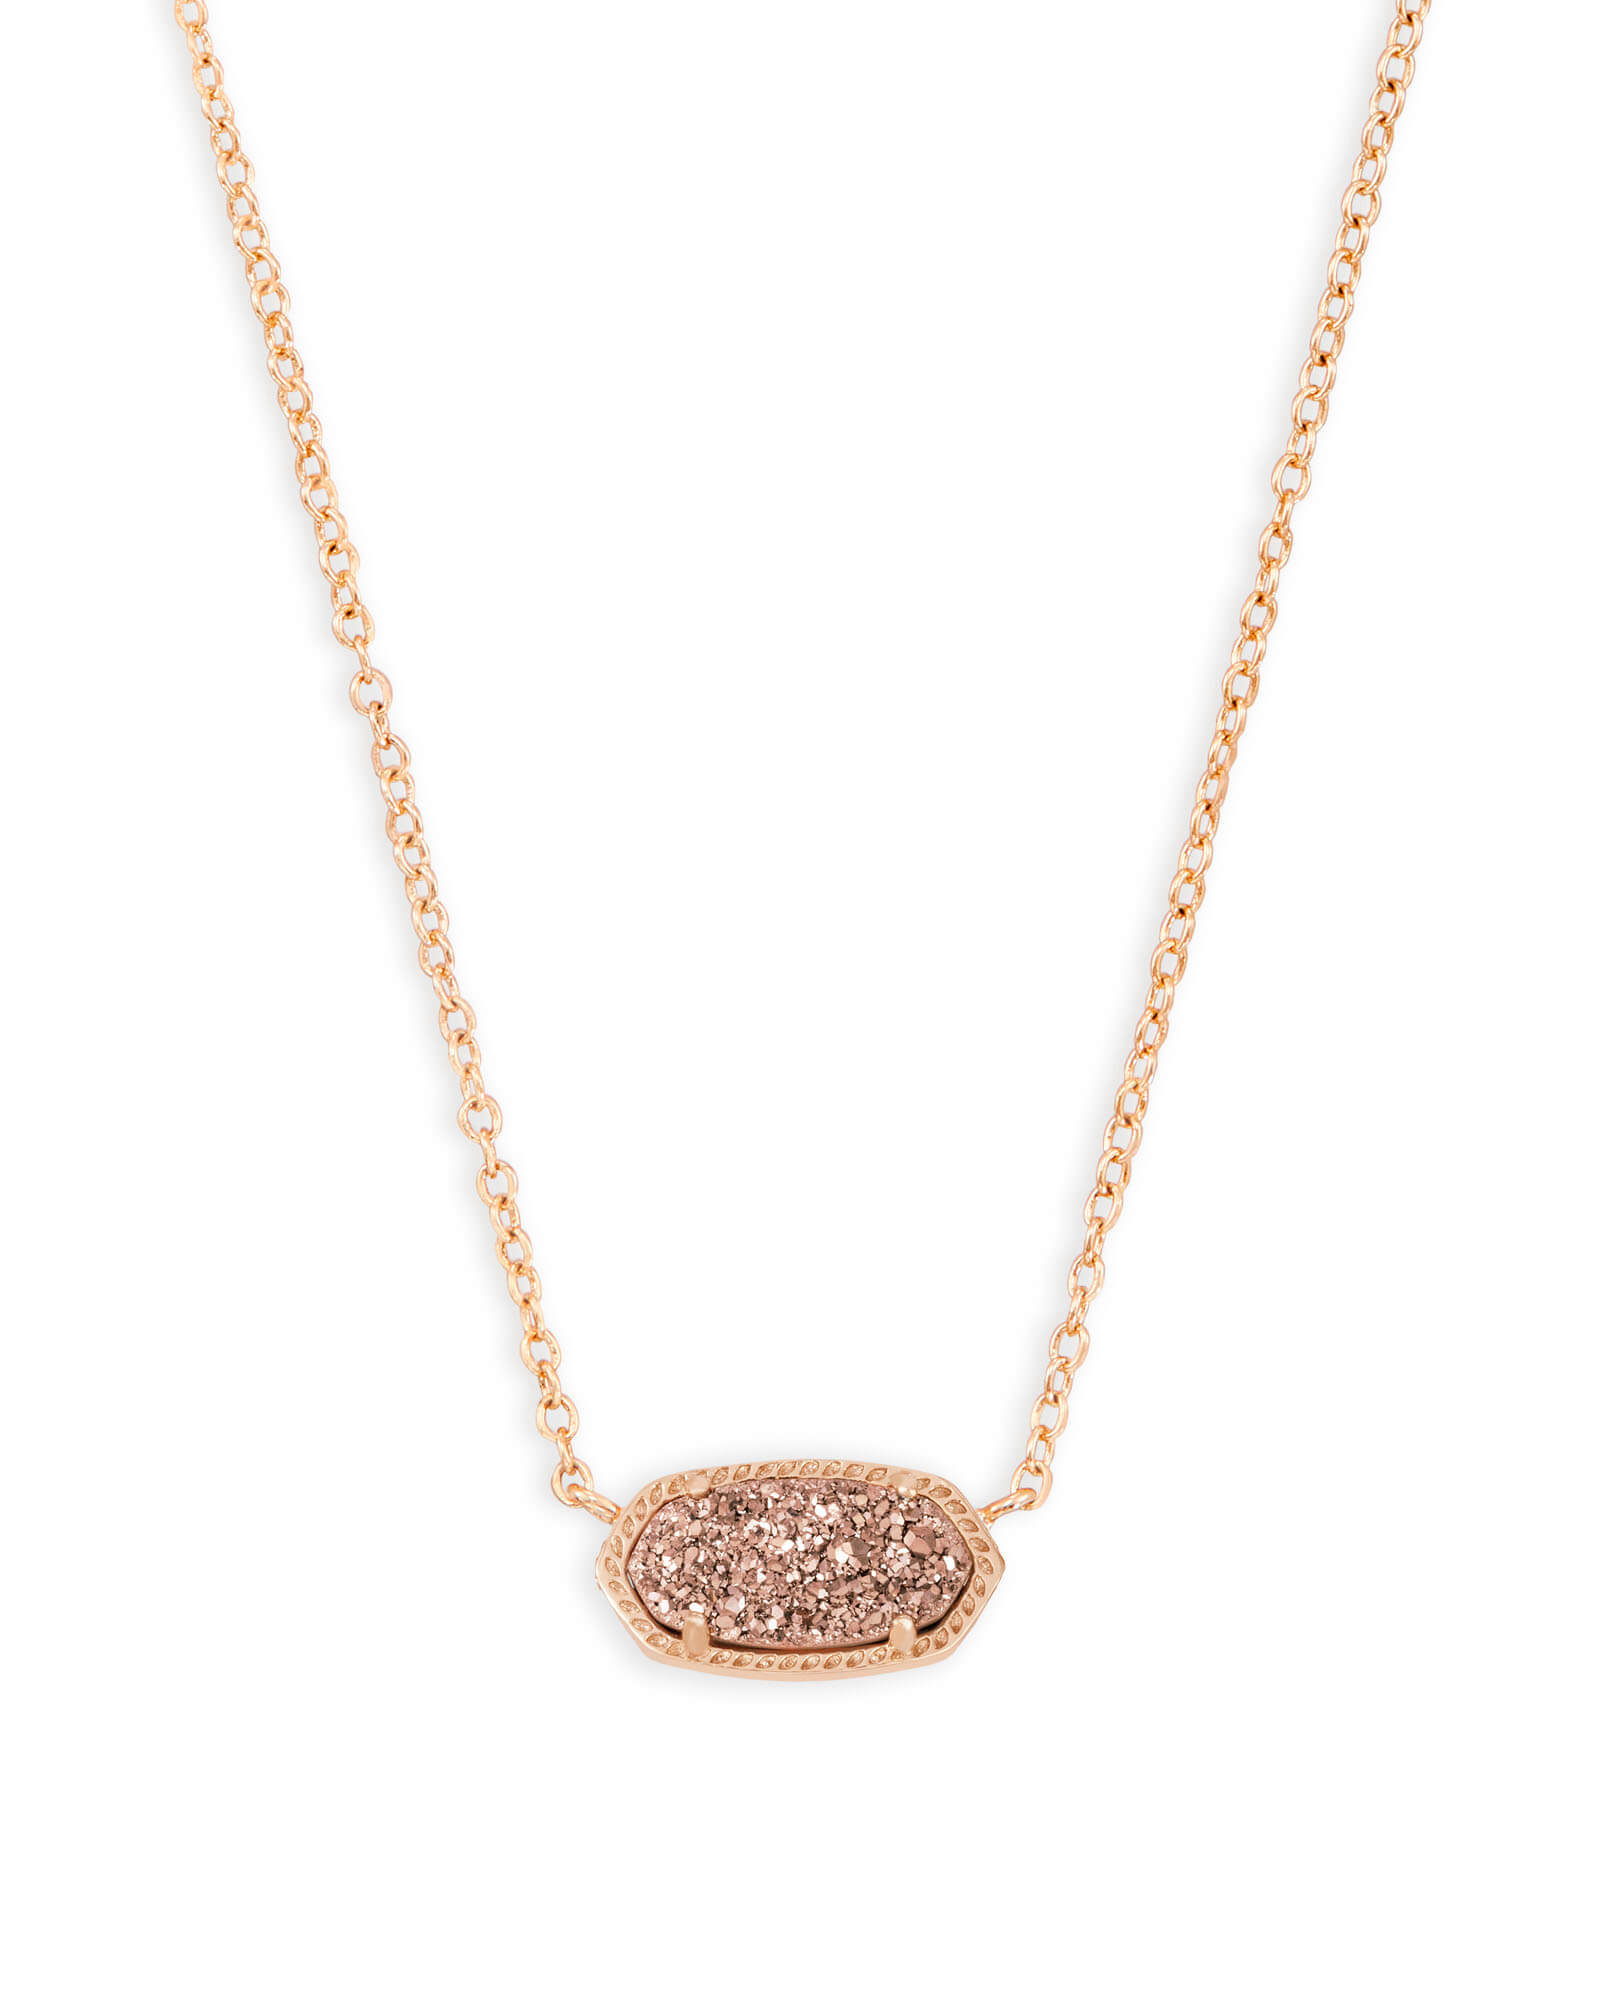 Photos - Pendant / Choker Necklace KENDRA SCOTT Elisa Rose Gold Pendant Necklace in Rose Gold | Drusy 